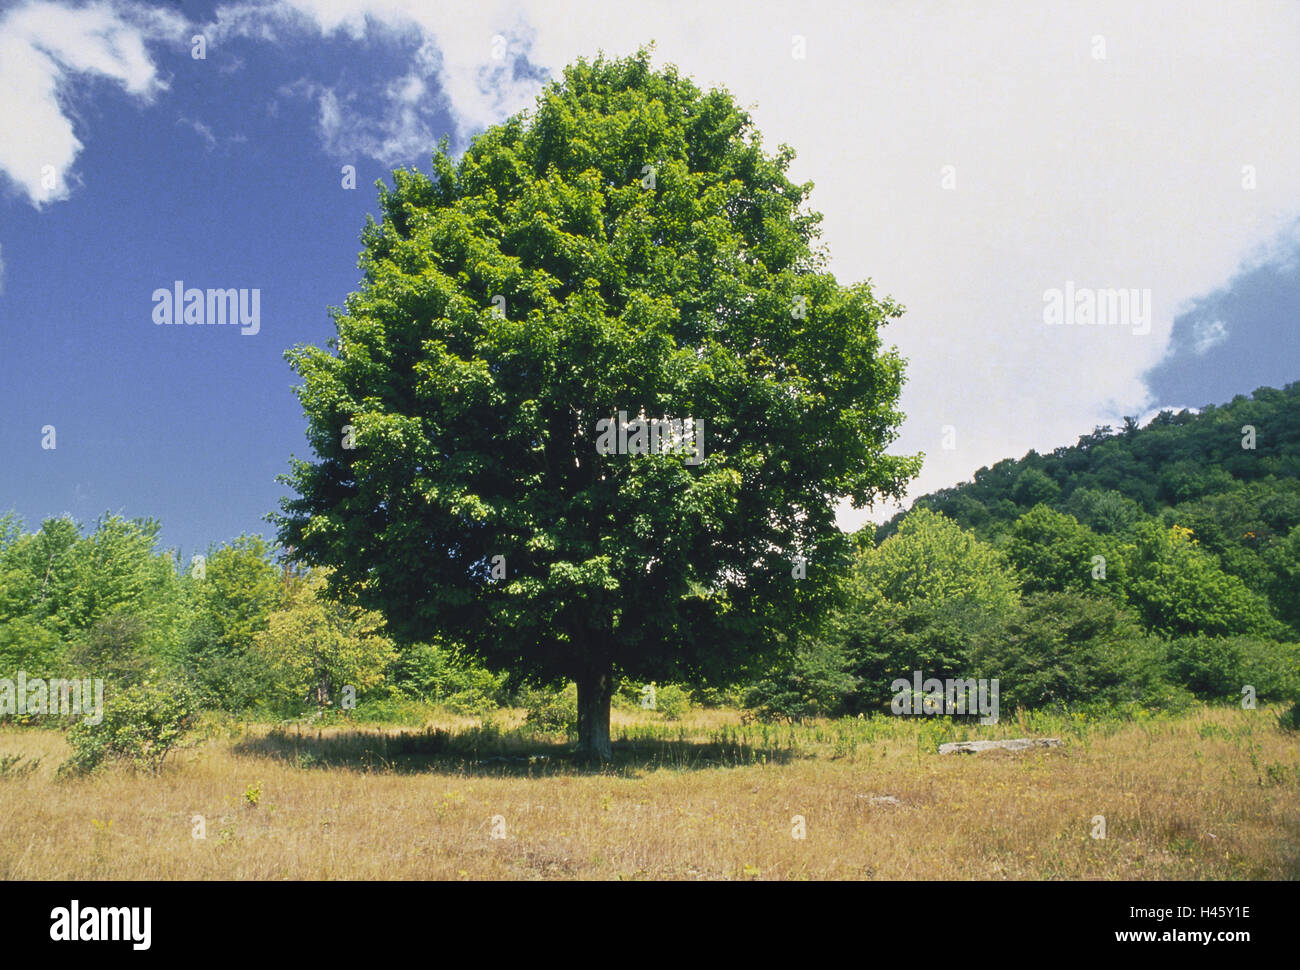 Maple tree, summer, season, broad-leaved tree, leaves, green, heaven, clouds, shrubs, meadow, shade, plant, tree, Stock Photo